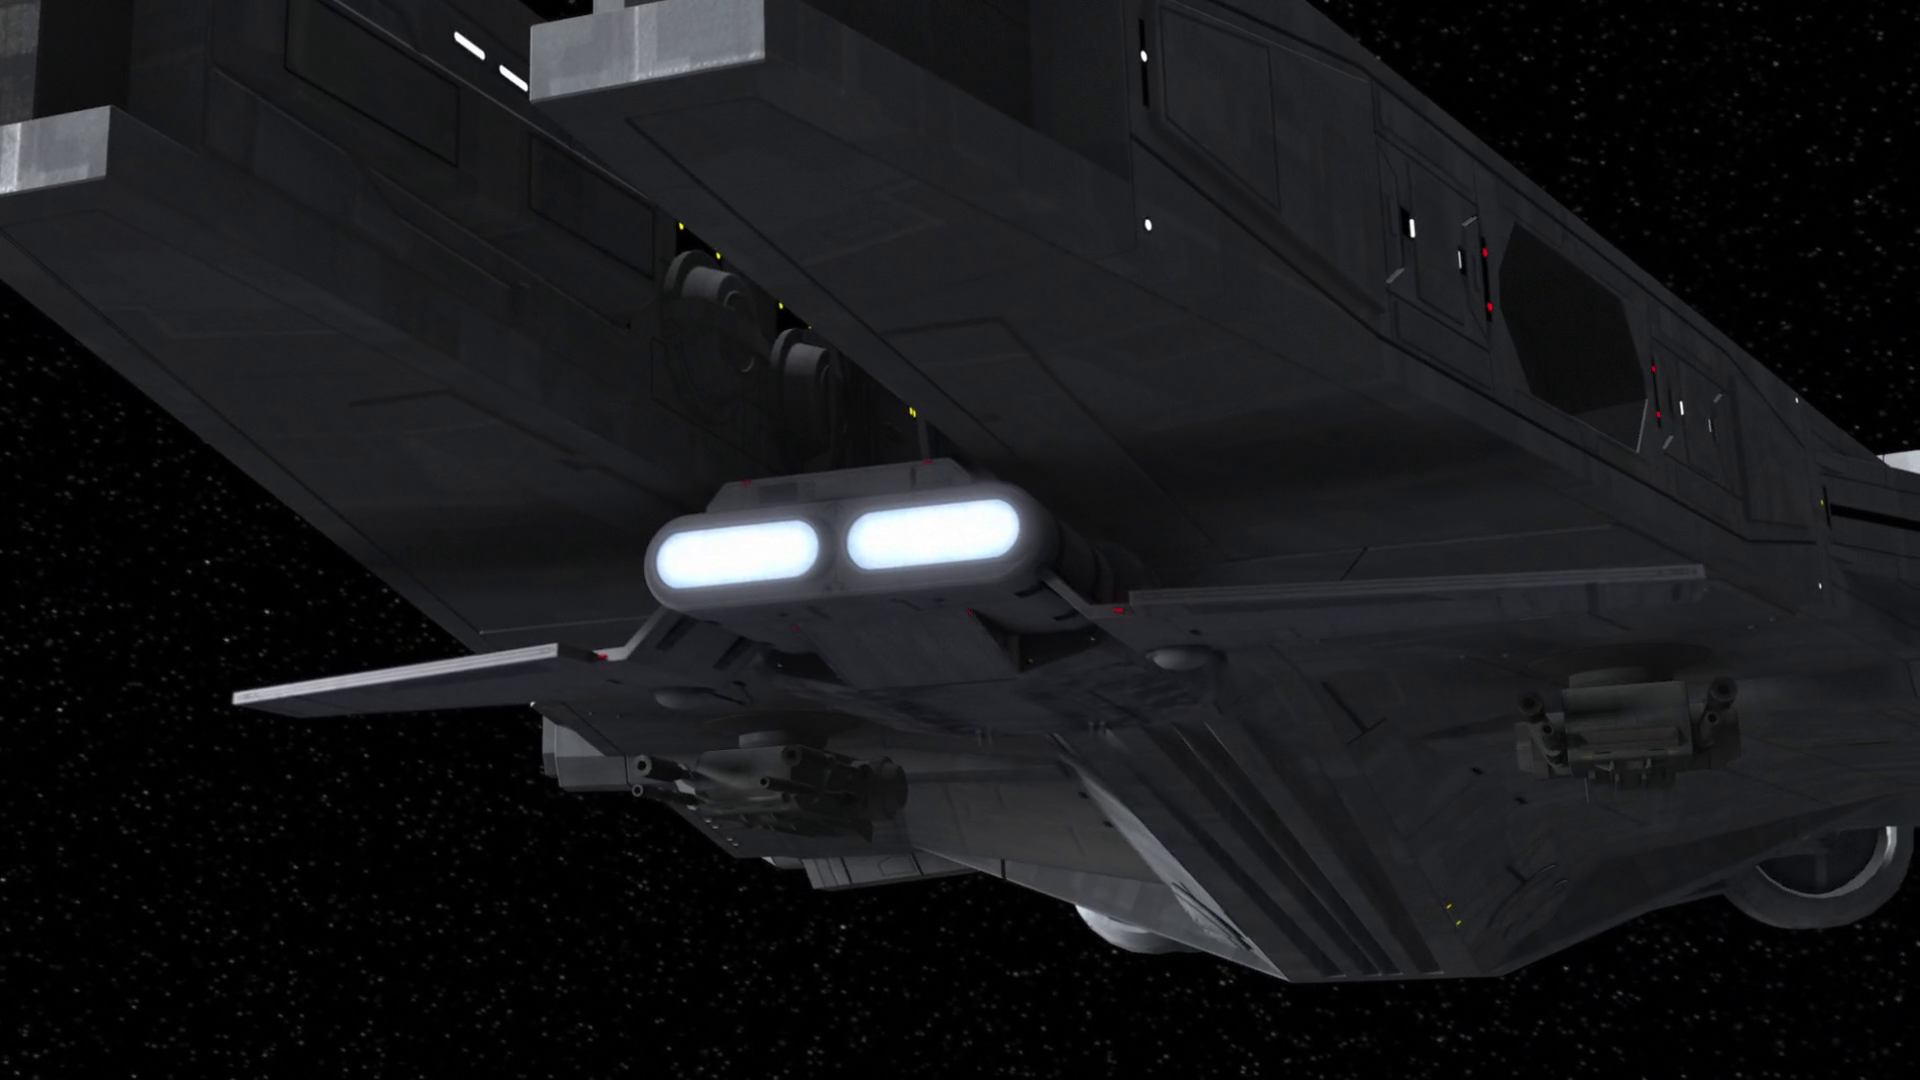 star wars imperial light cruiser